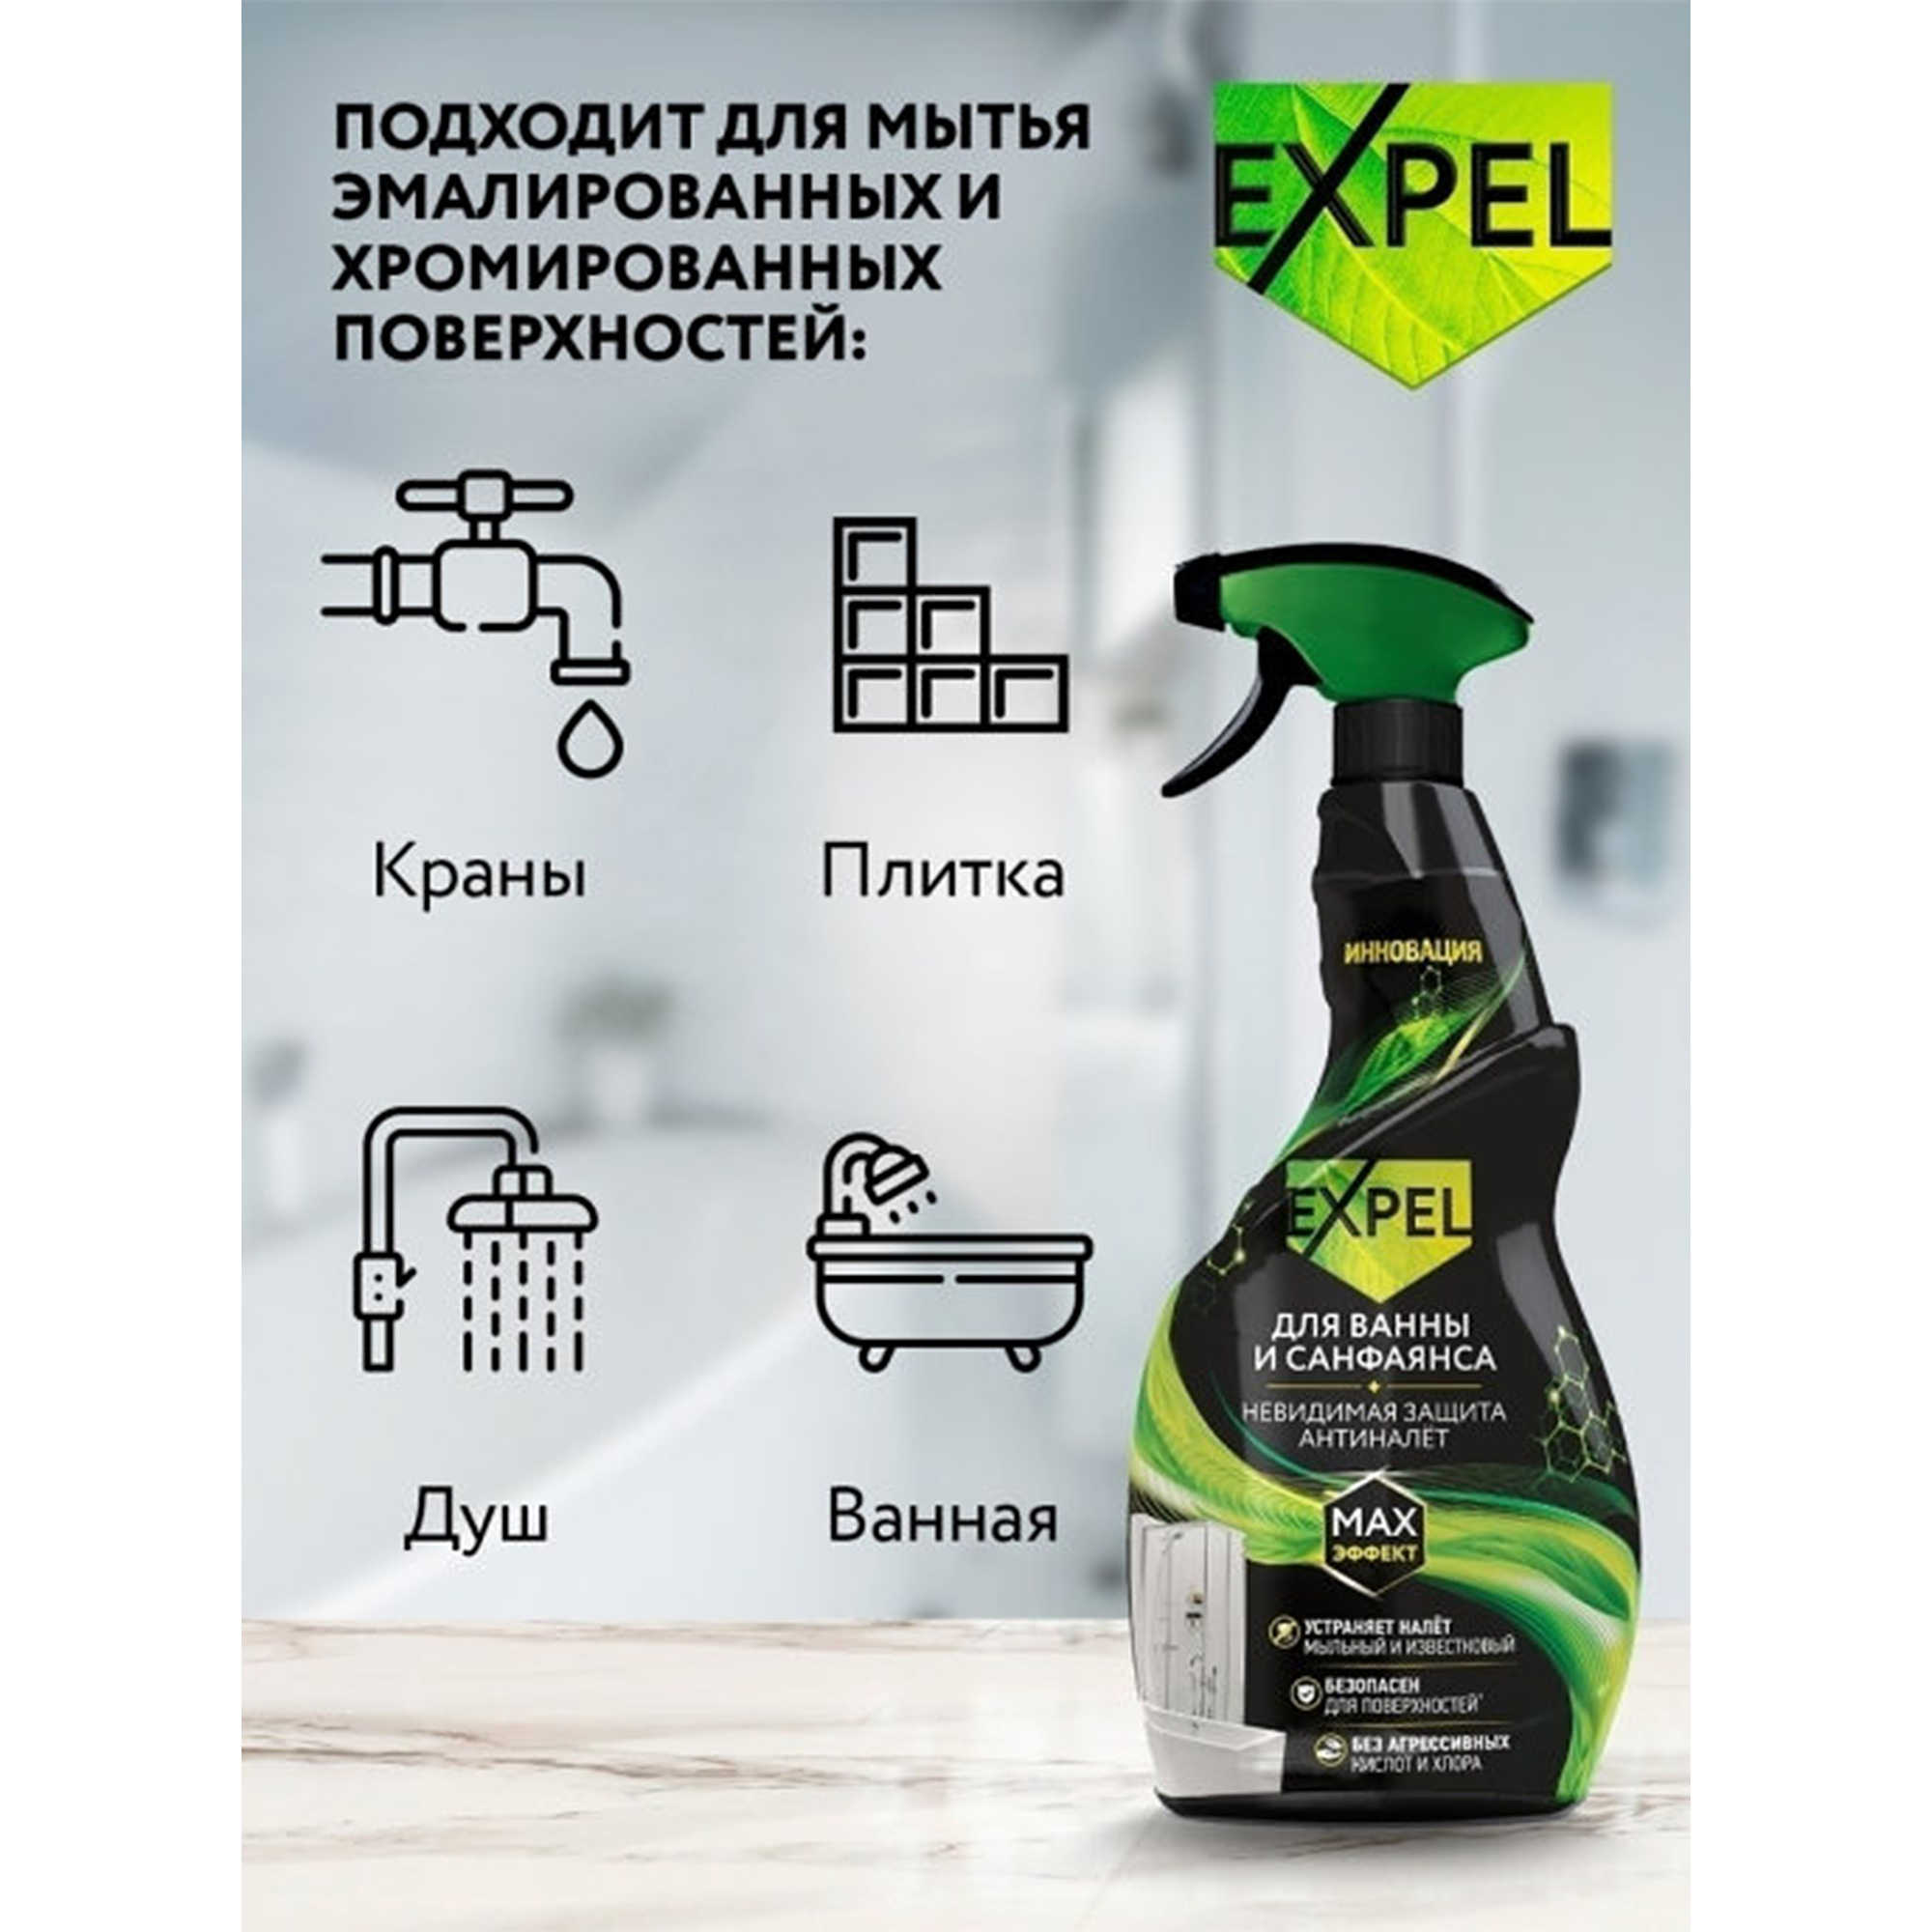 Спрей Expel для чистки санфаянса 600 мл + Спрей Expel для мытья стёкол и зеркал 450 мл - фото 3